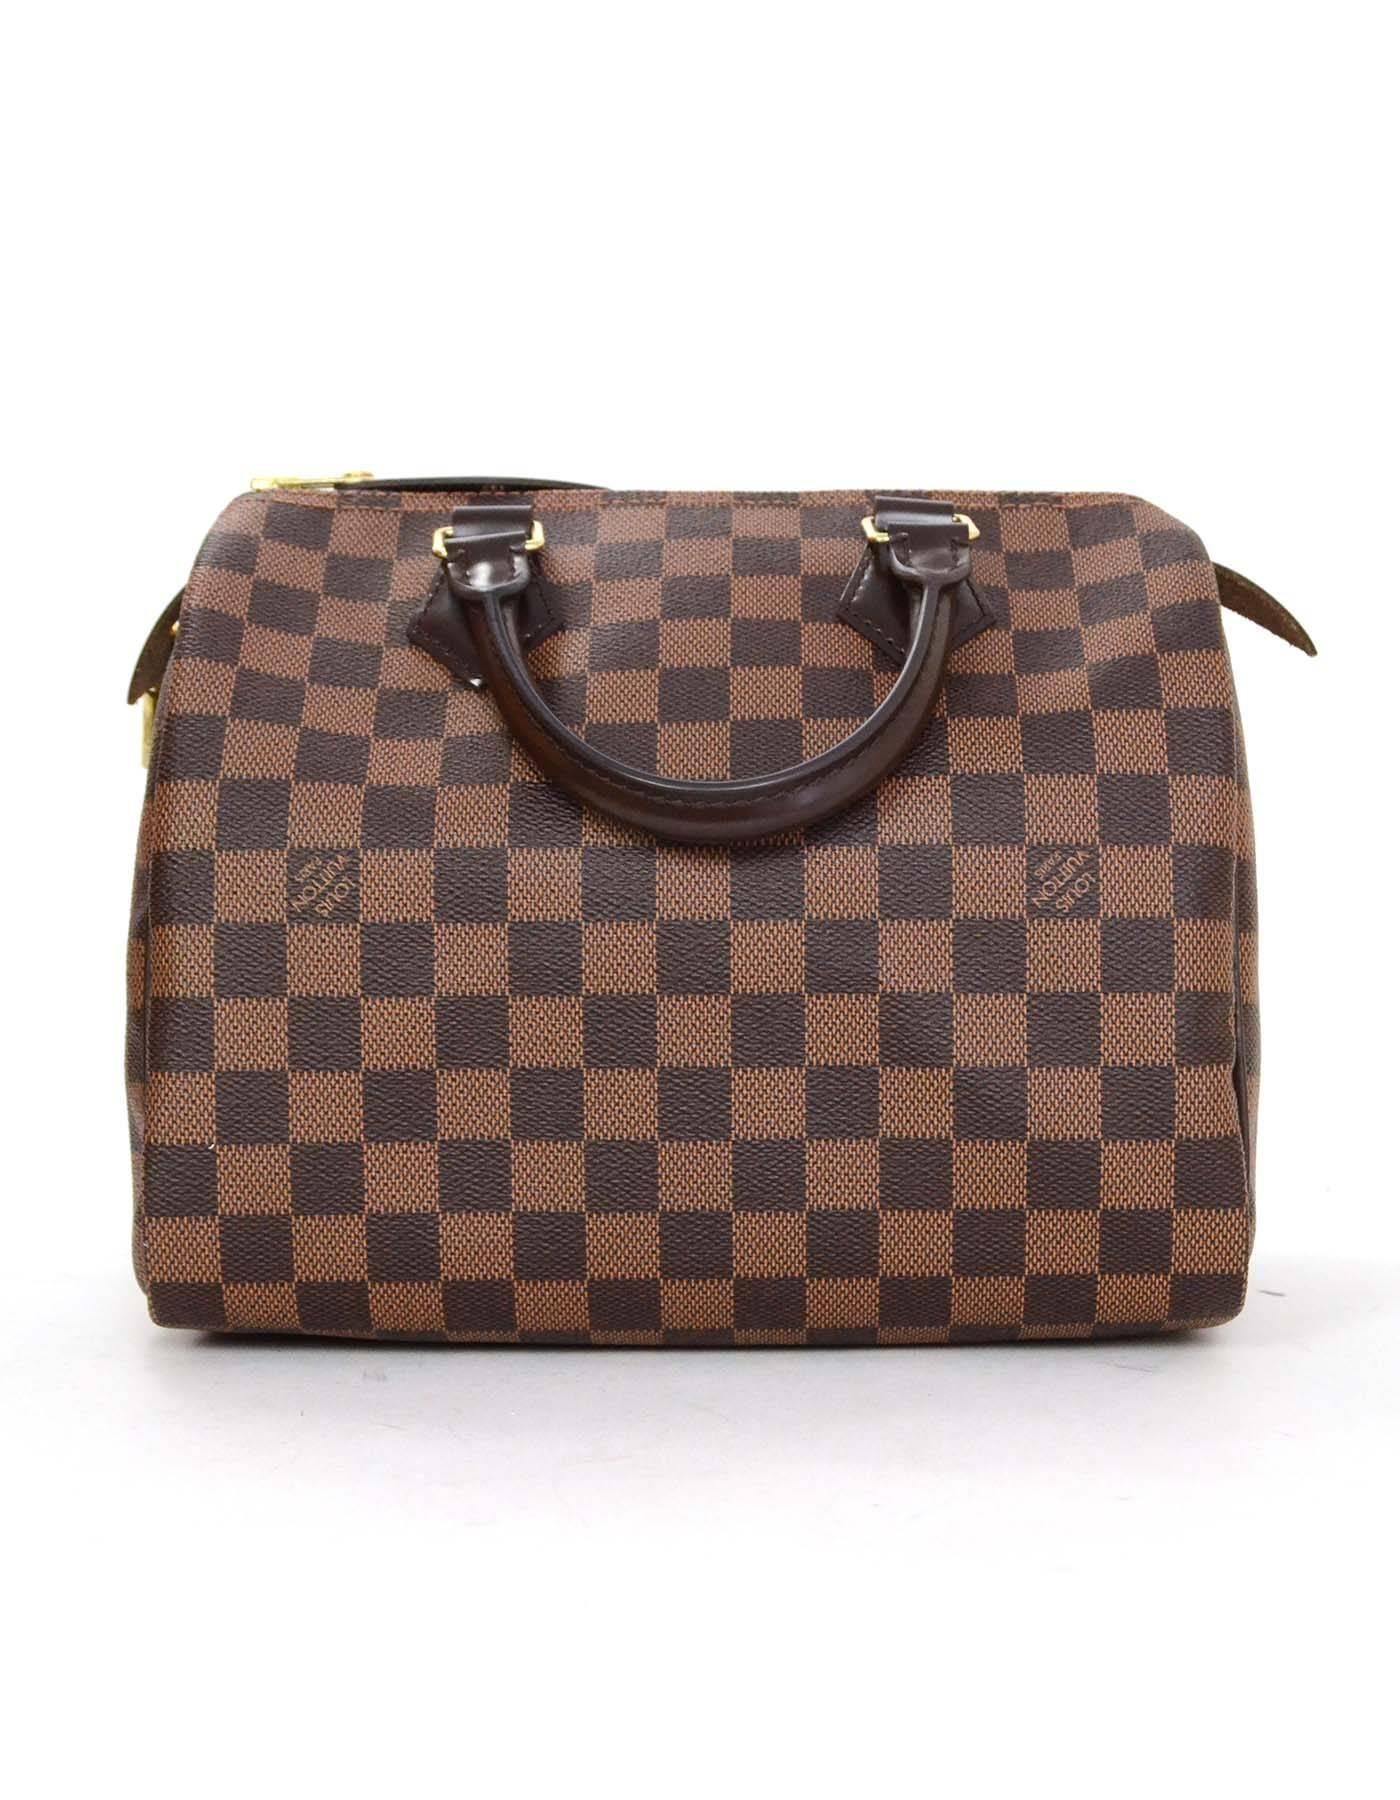 Women's Louis Vuitton Like New Brown Damier Ebene Speedy 25 Bag